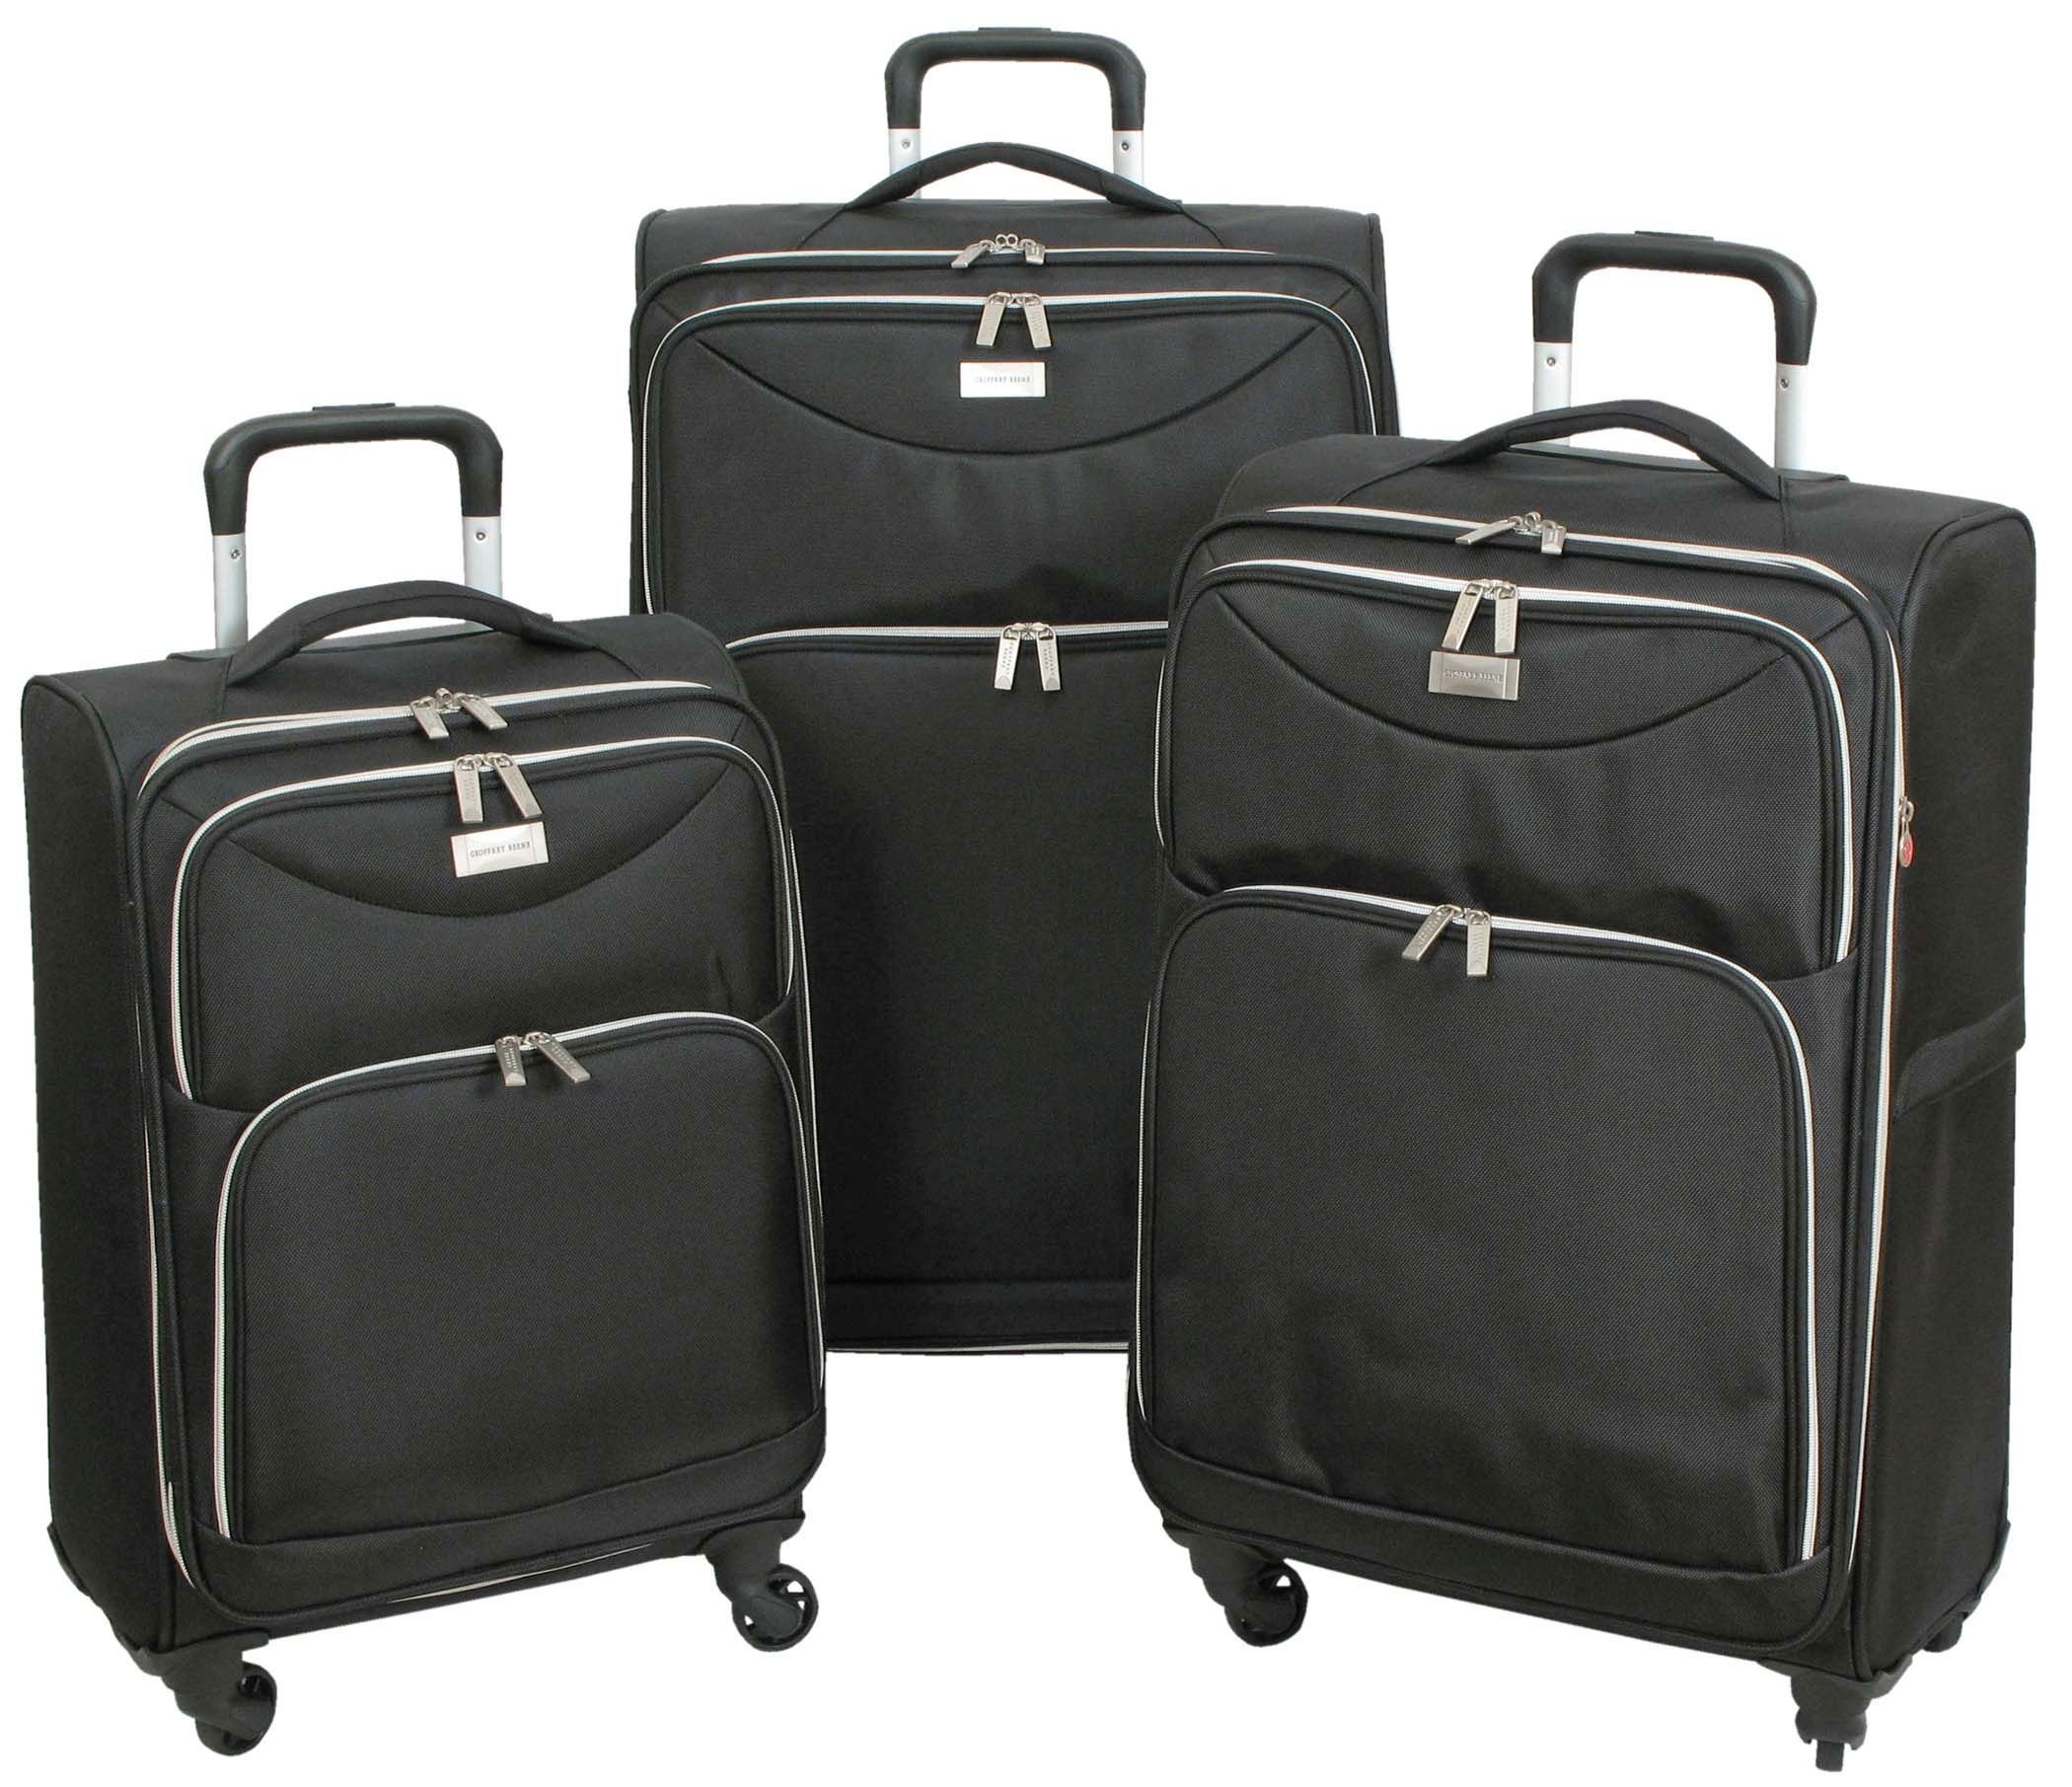 Gb3682-3 Ultra Light-weight Midnight Spinner Luggage Set, Black